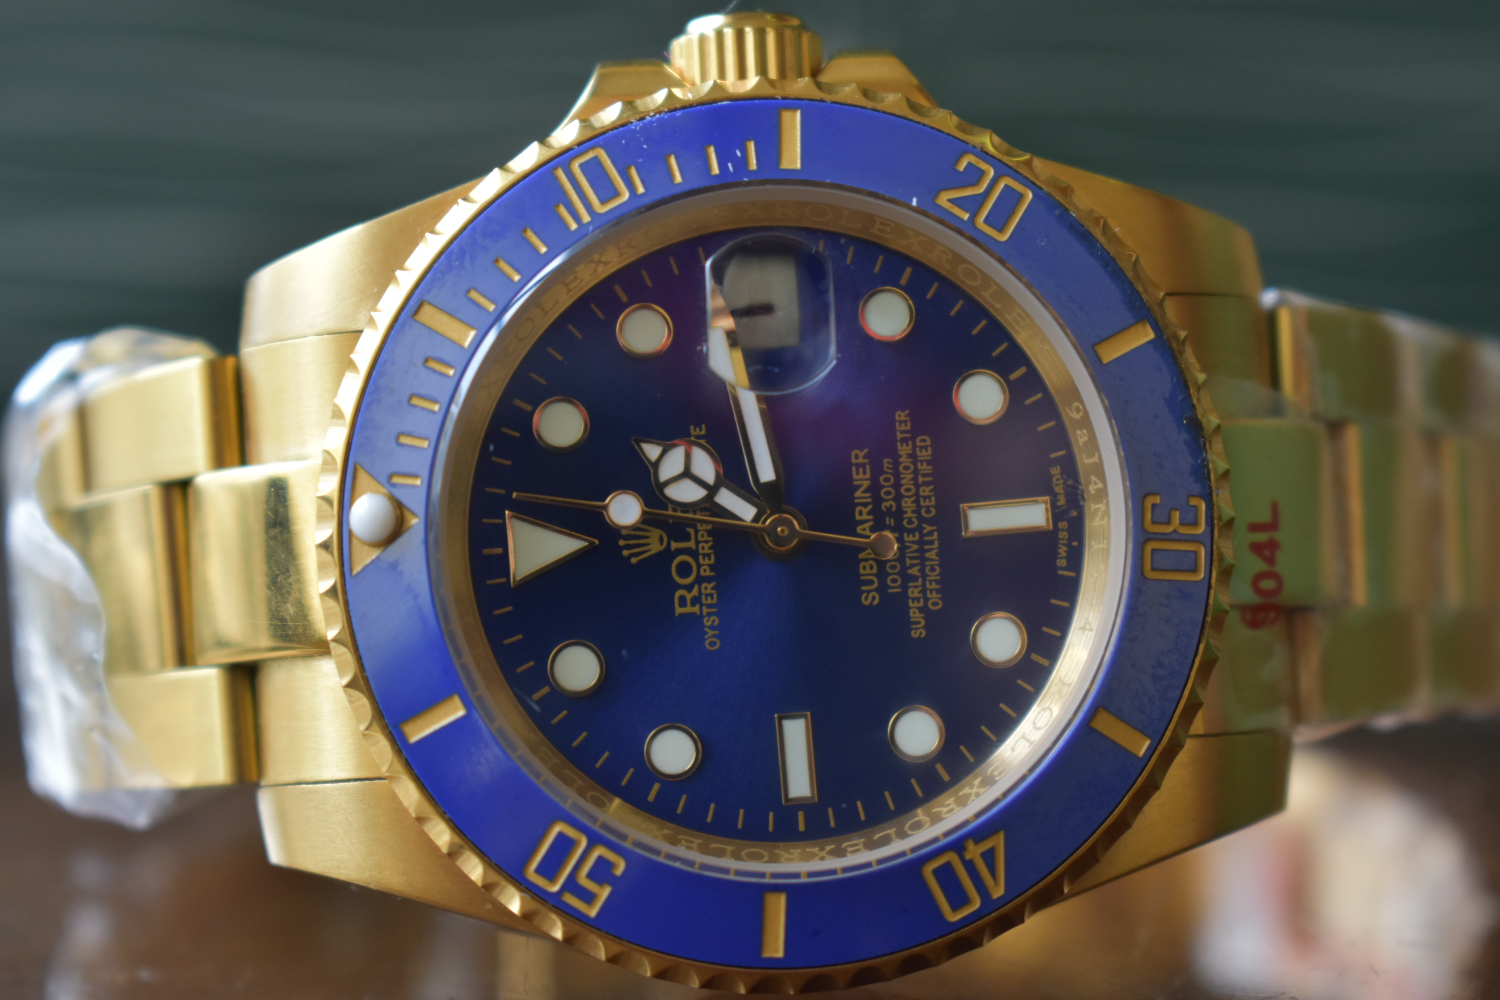 Rolex Submariner Date 41 mm 126618 LB Yellow Gold Blue Bezel Blue Dial for sale in Nairobi,Kenya.